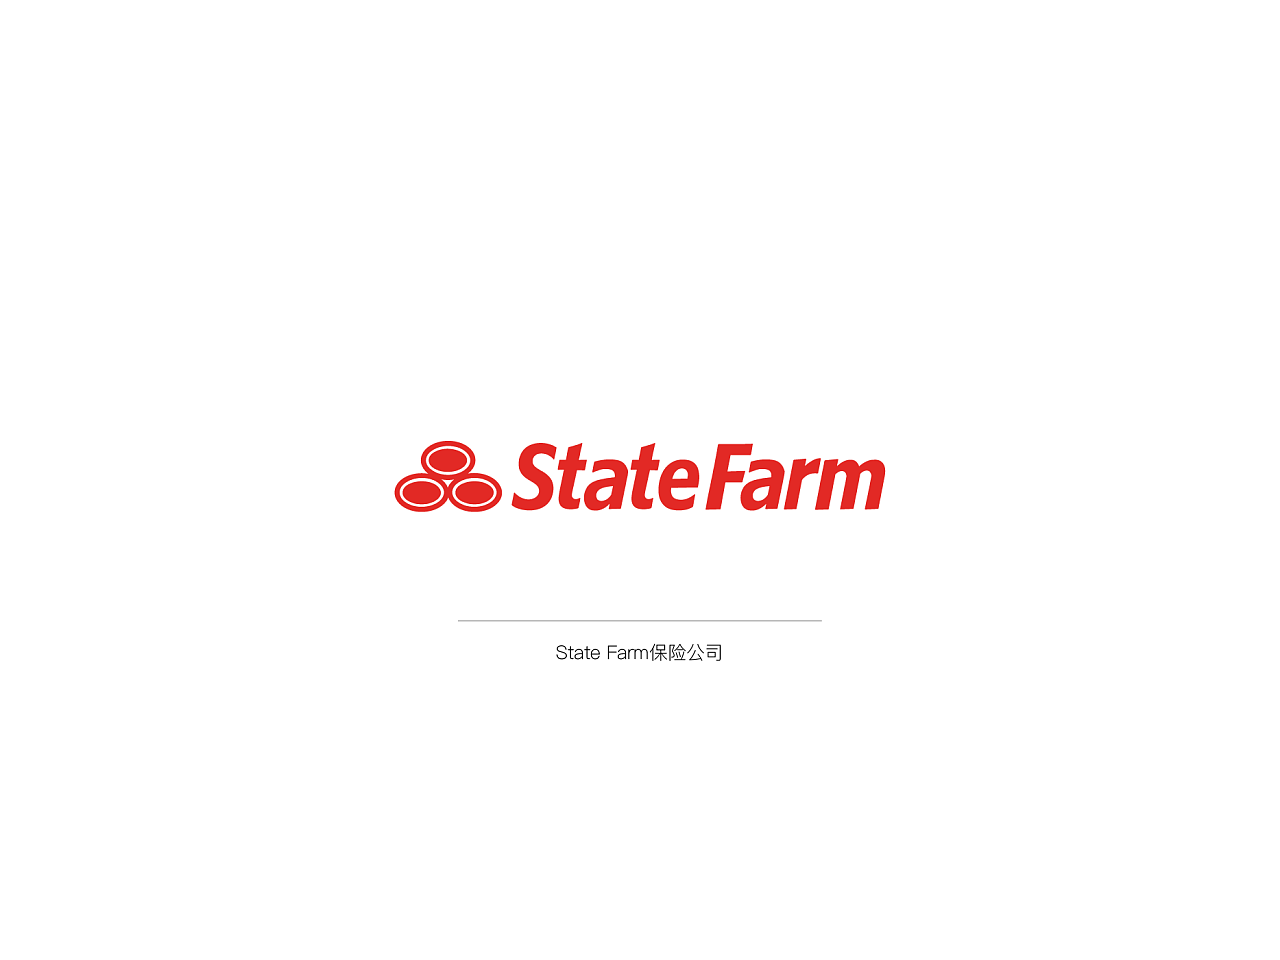 State Farm保险是美国最大的保险公司之一，在美国家喻户晓。在2019年的世界五百强企业中排名第36位。